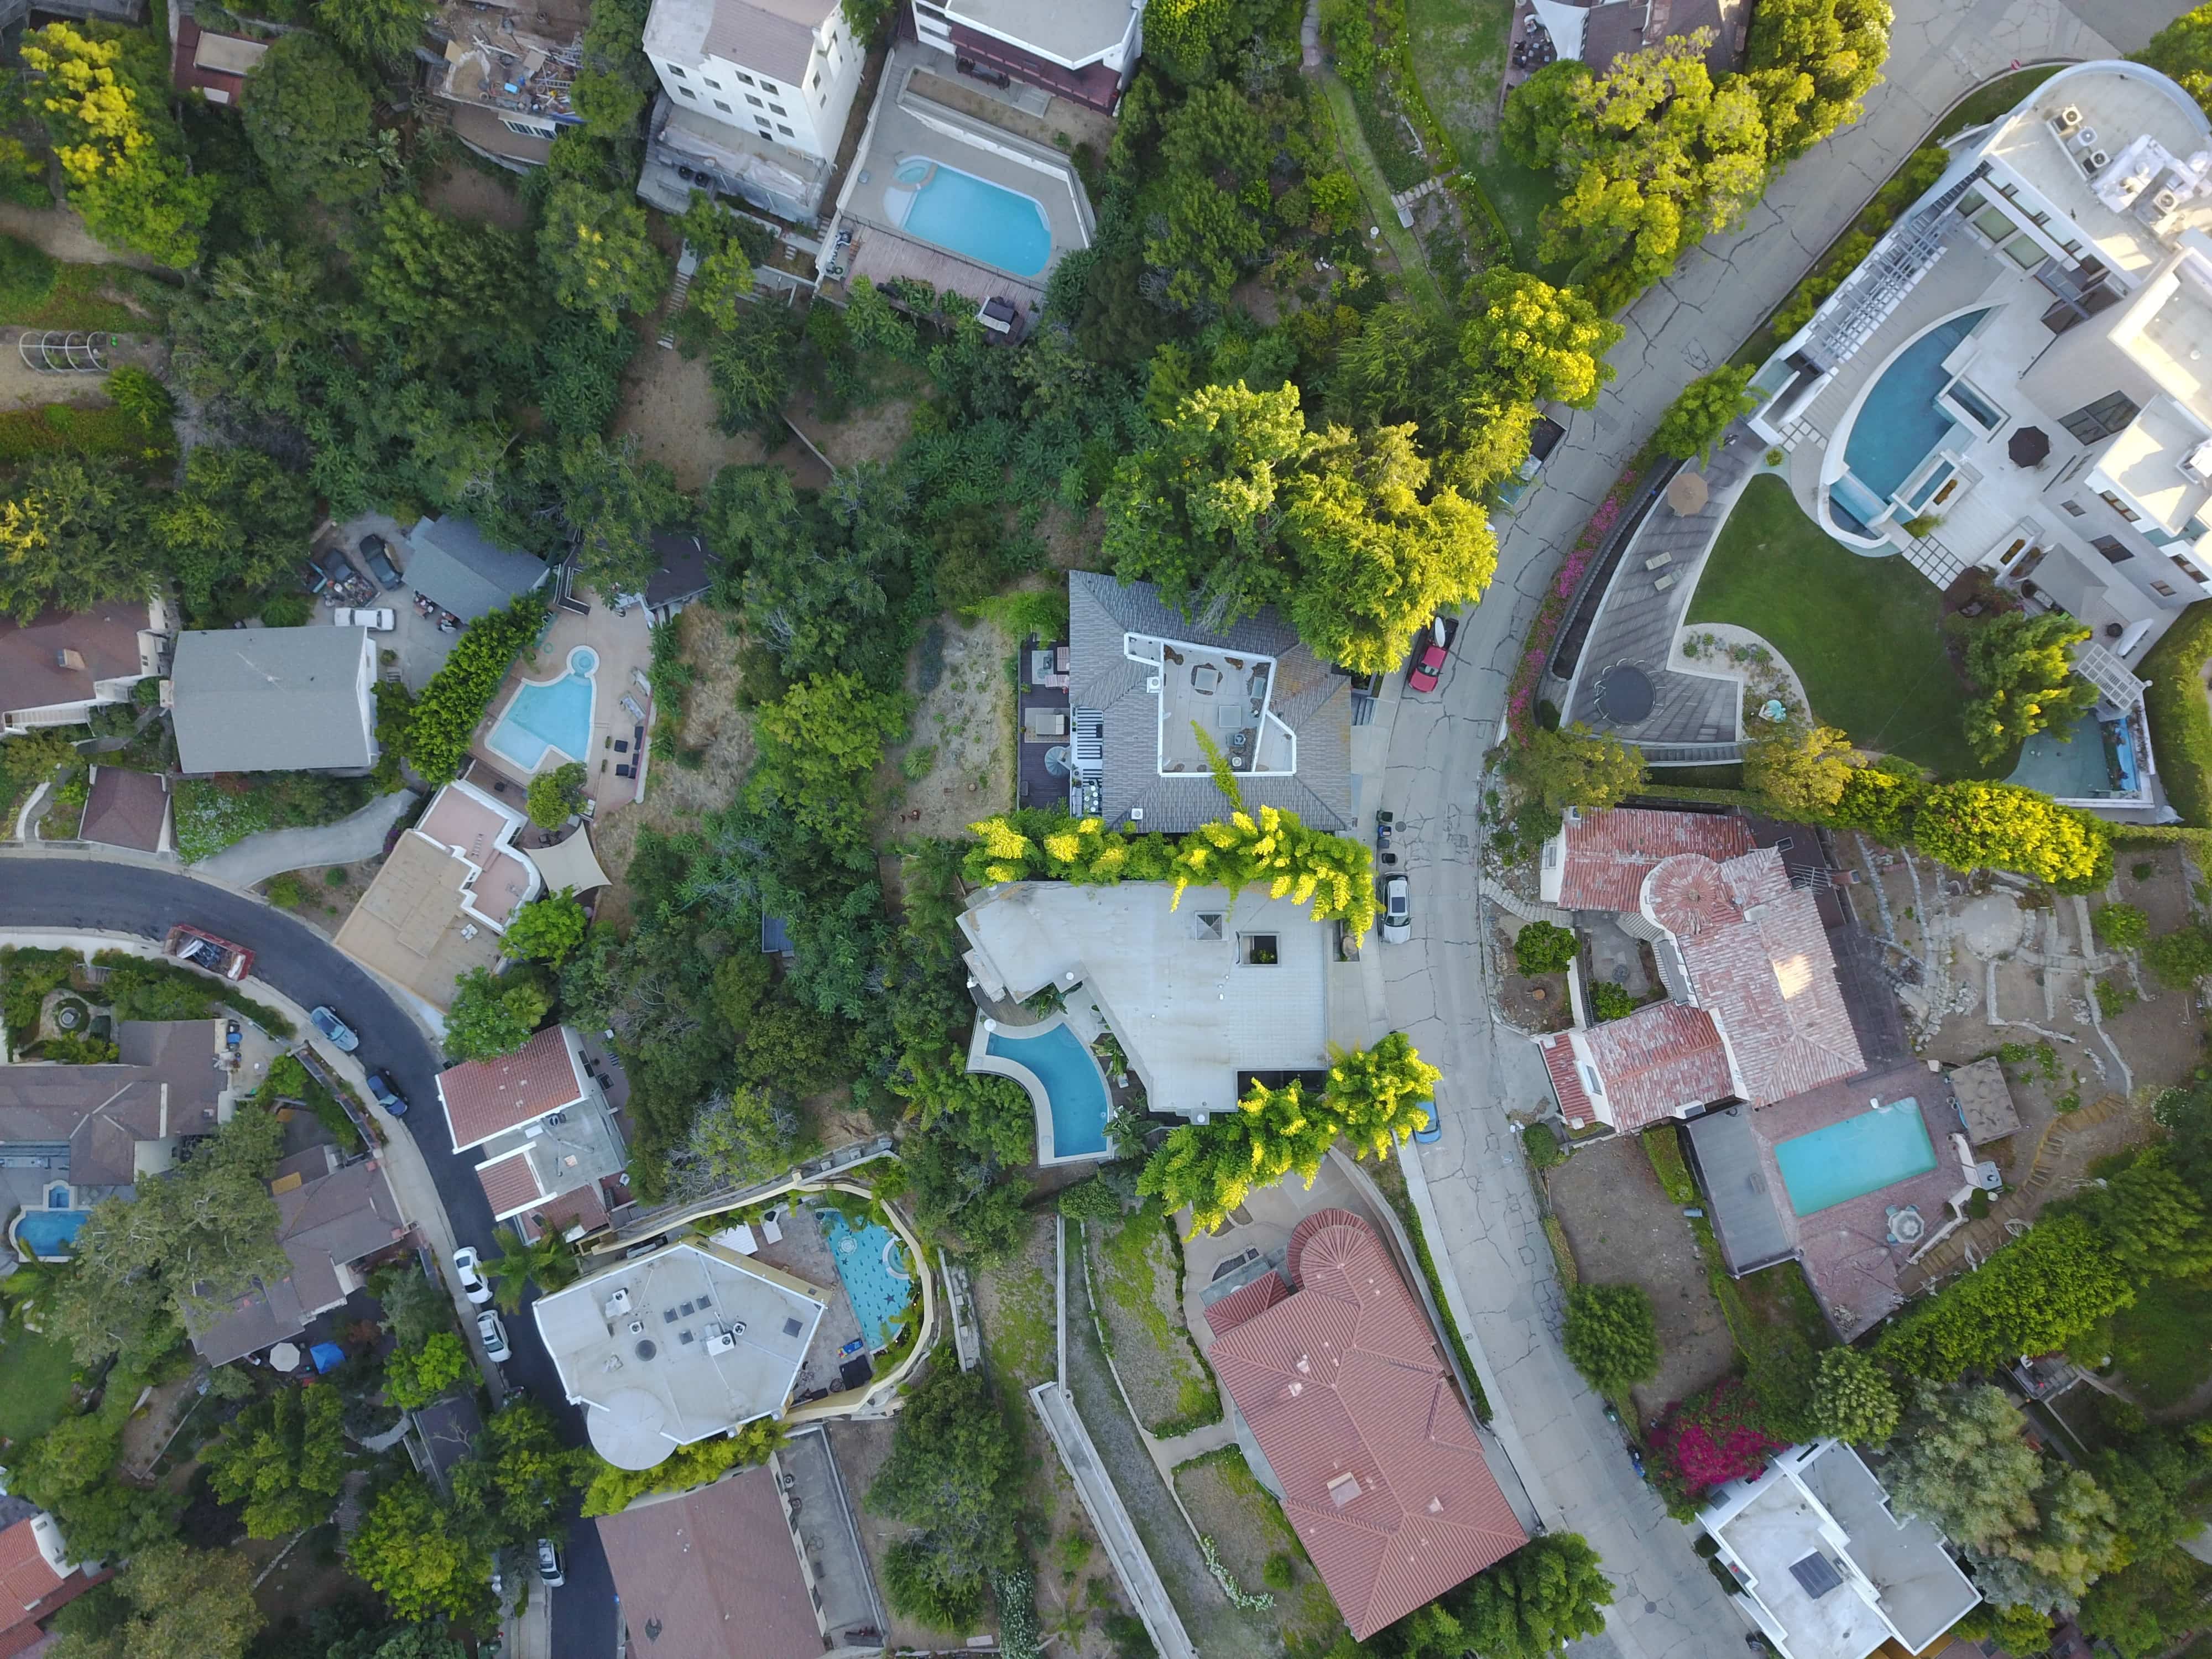 Vacancy Tax- Overhead view of suburban street